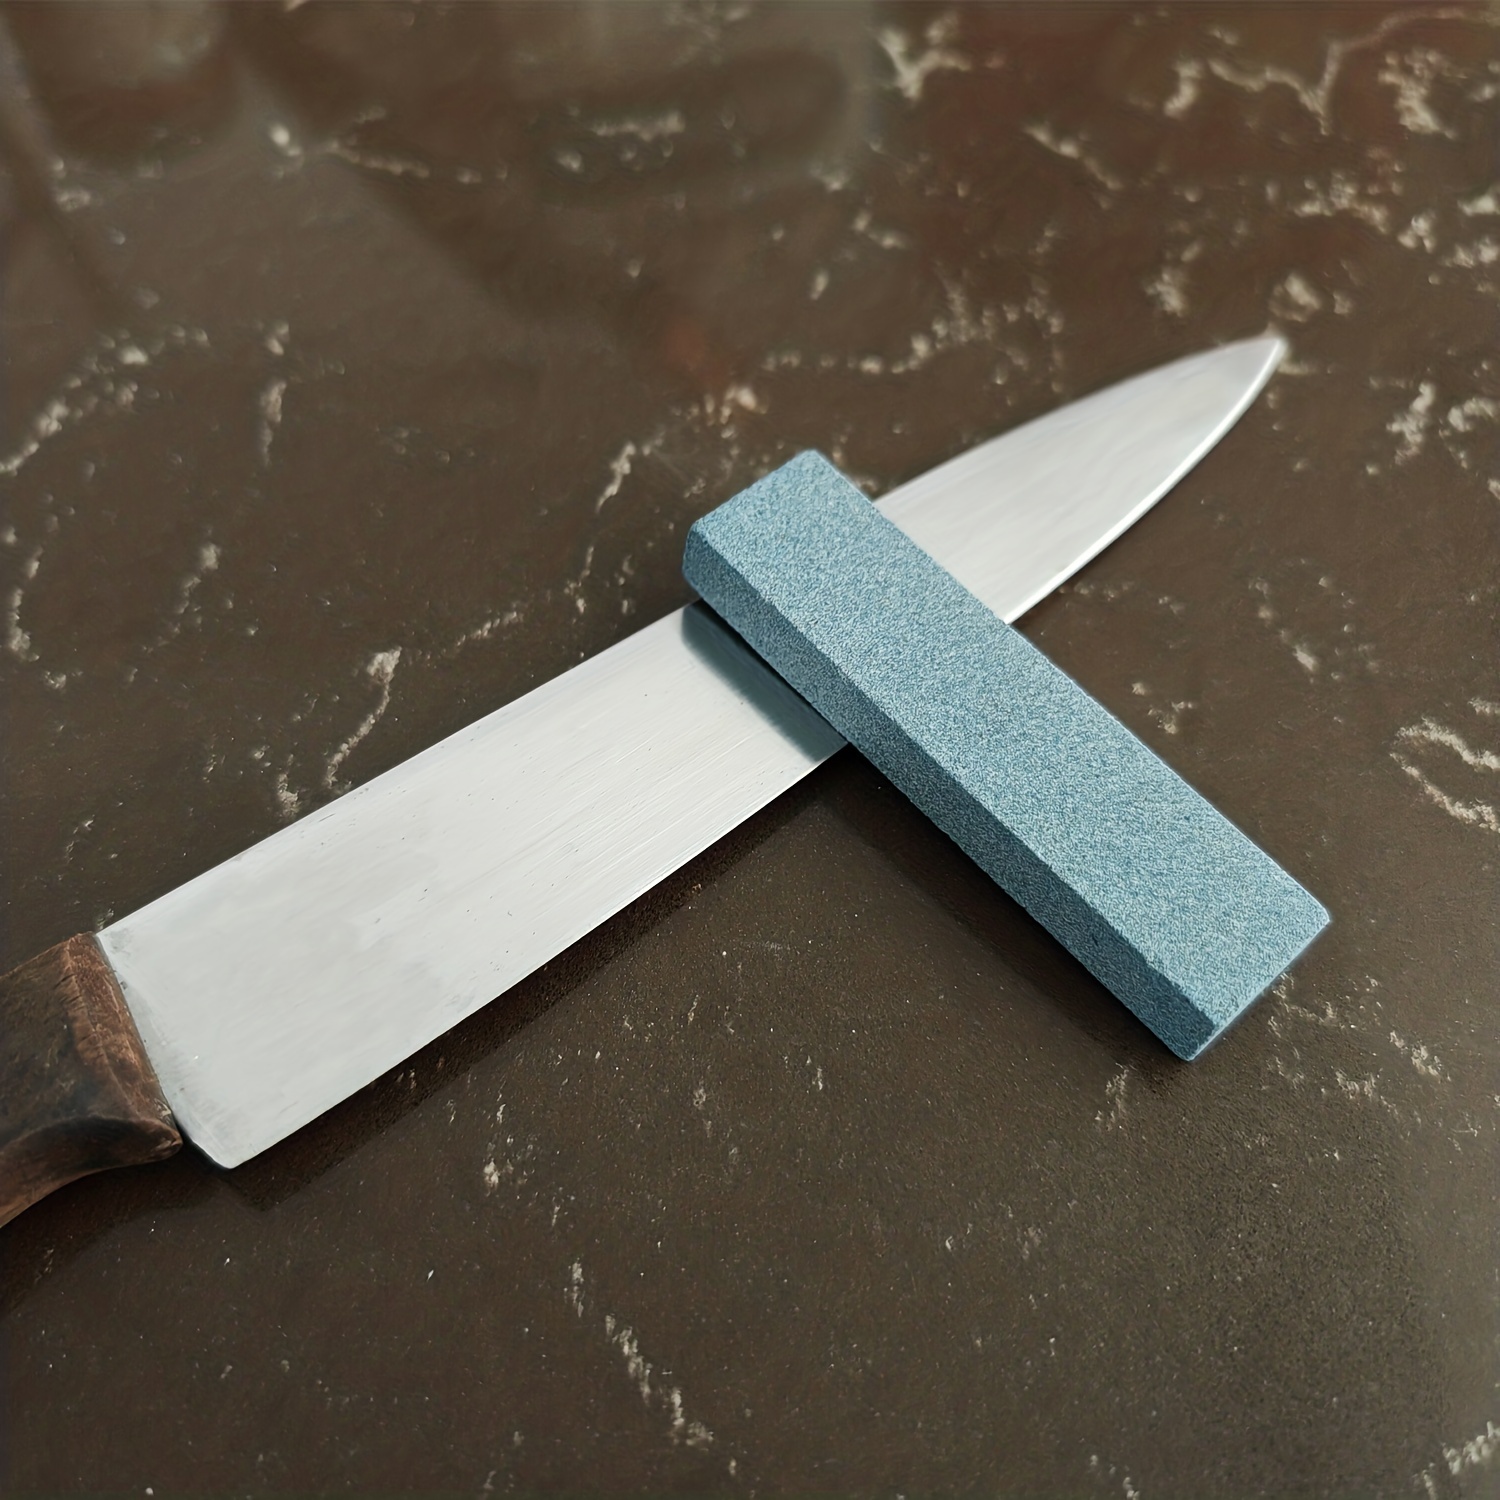 1pcs Knife Sharpening Artifact Multifunctional Household Quick Whetstone  Manual Kitchen Special Fine Grinding Kitchen Knife Scissors Sharpening Tool